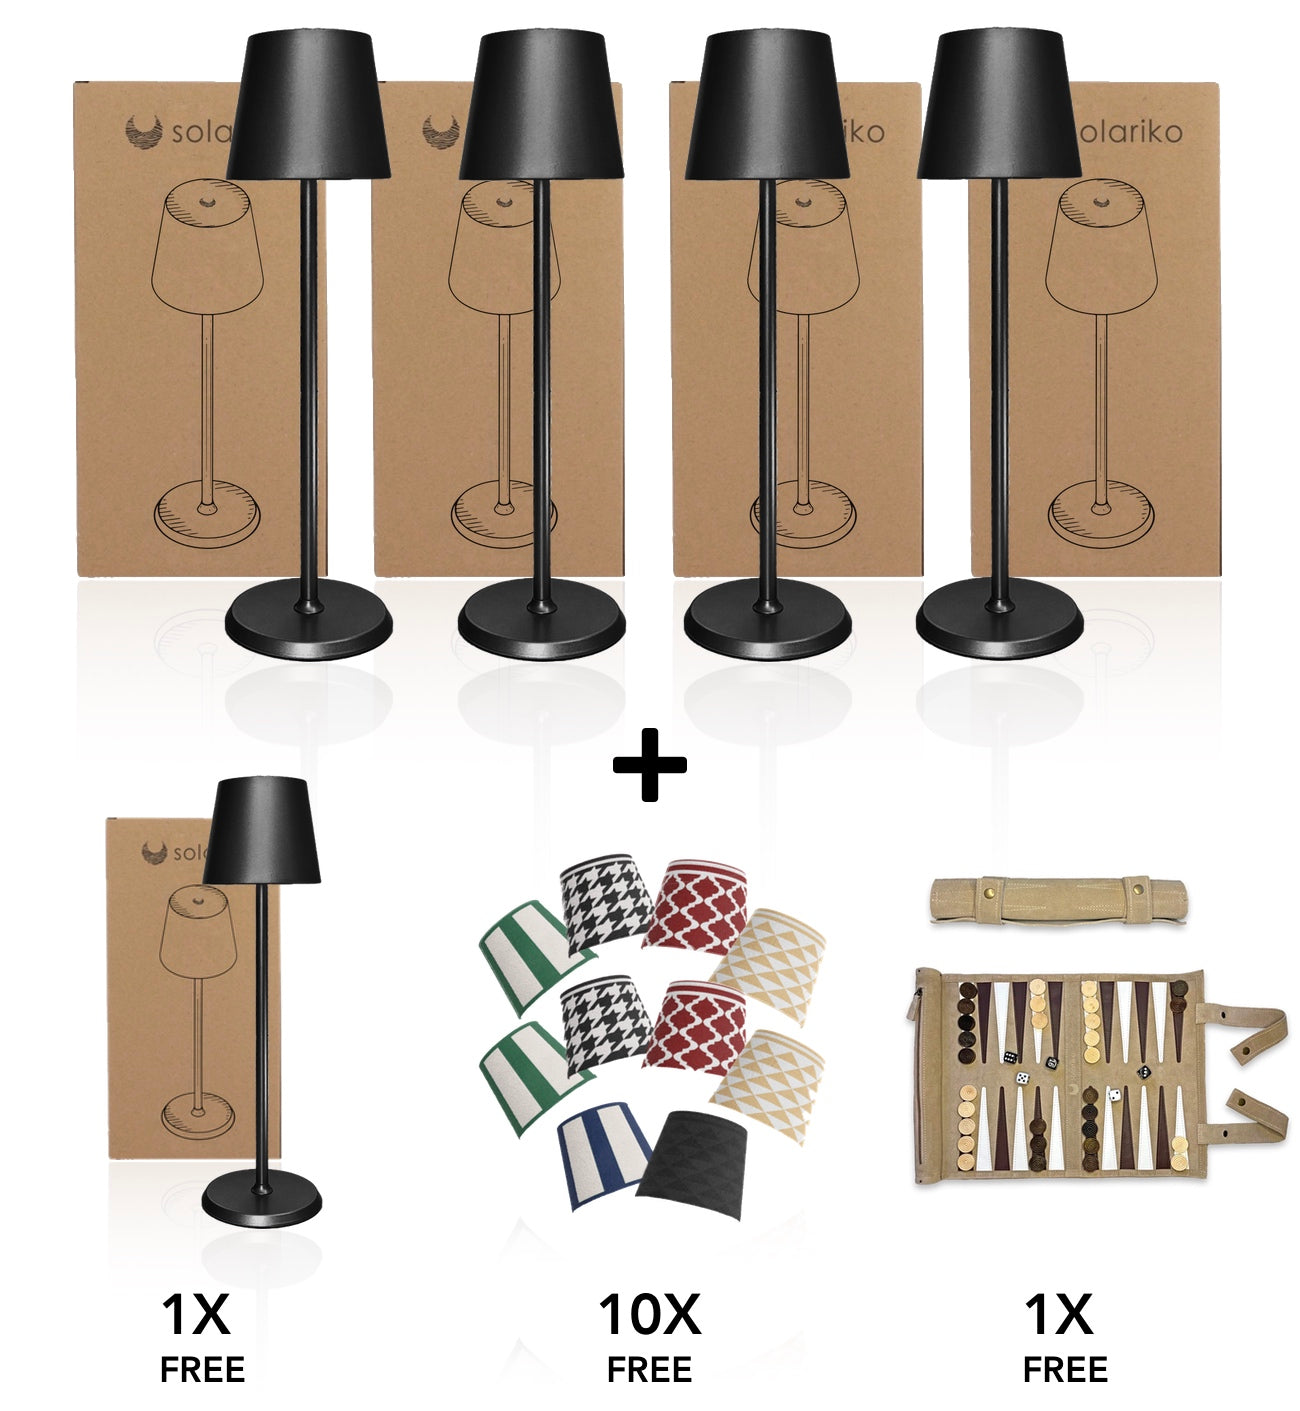 4 Lamps + 1 FREE Lamp + 10 FREE FunCovers ™ + 1 FREE Backgammon